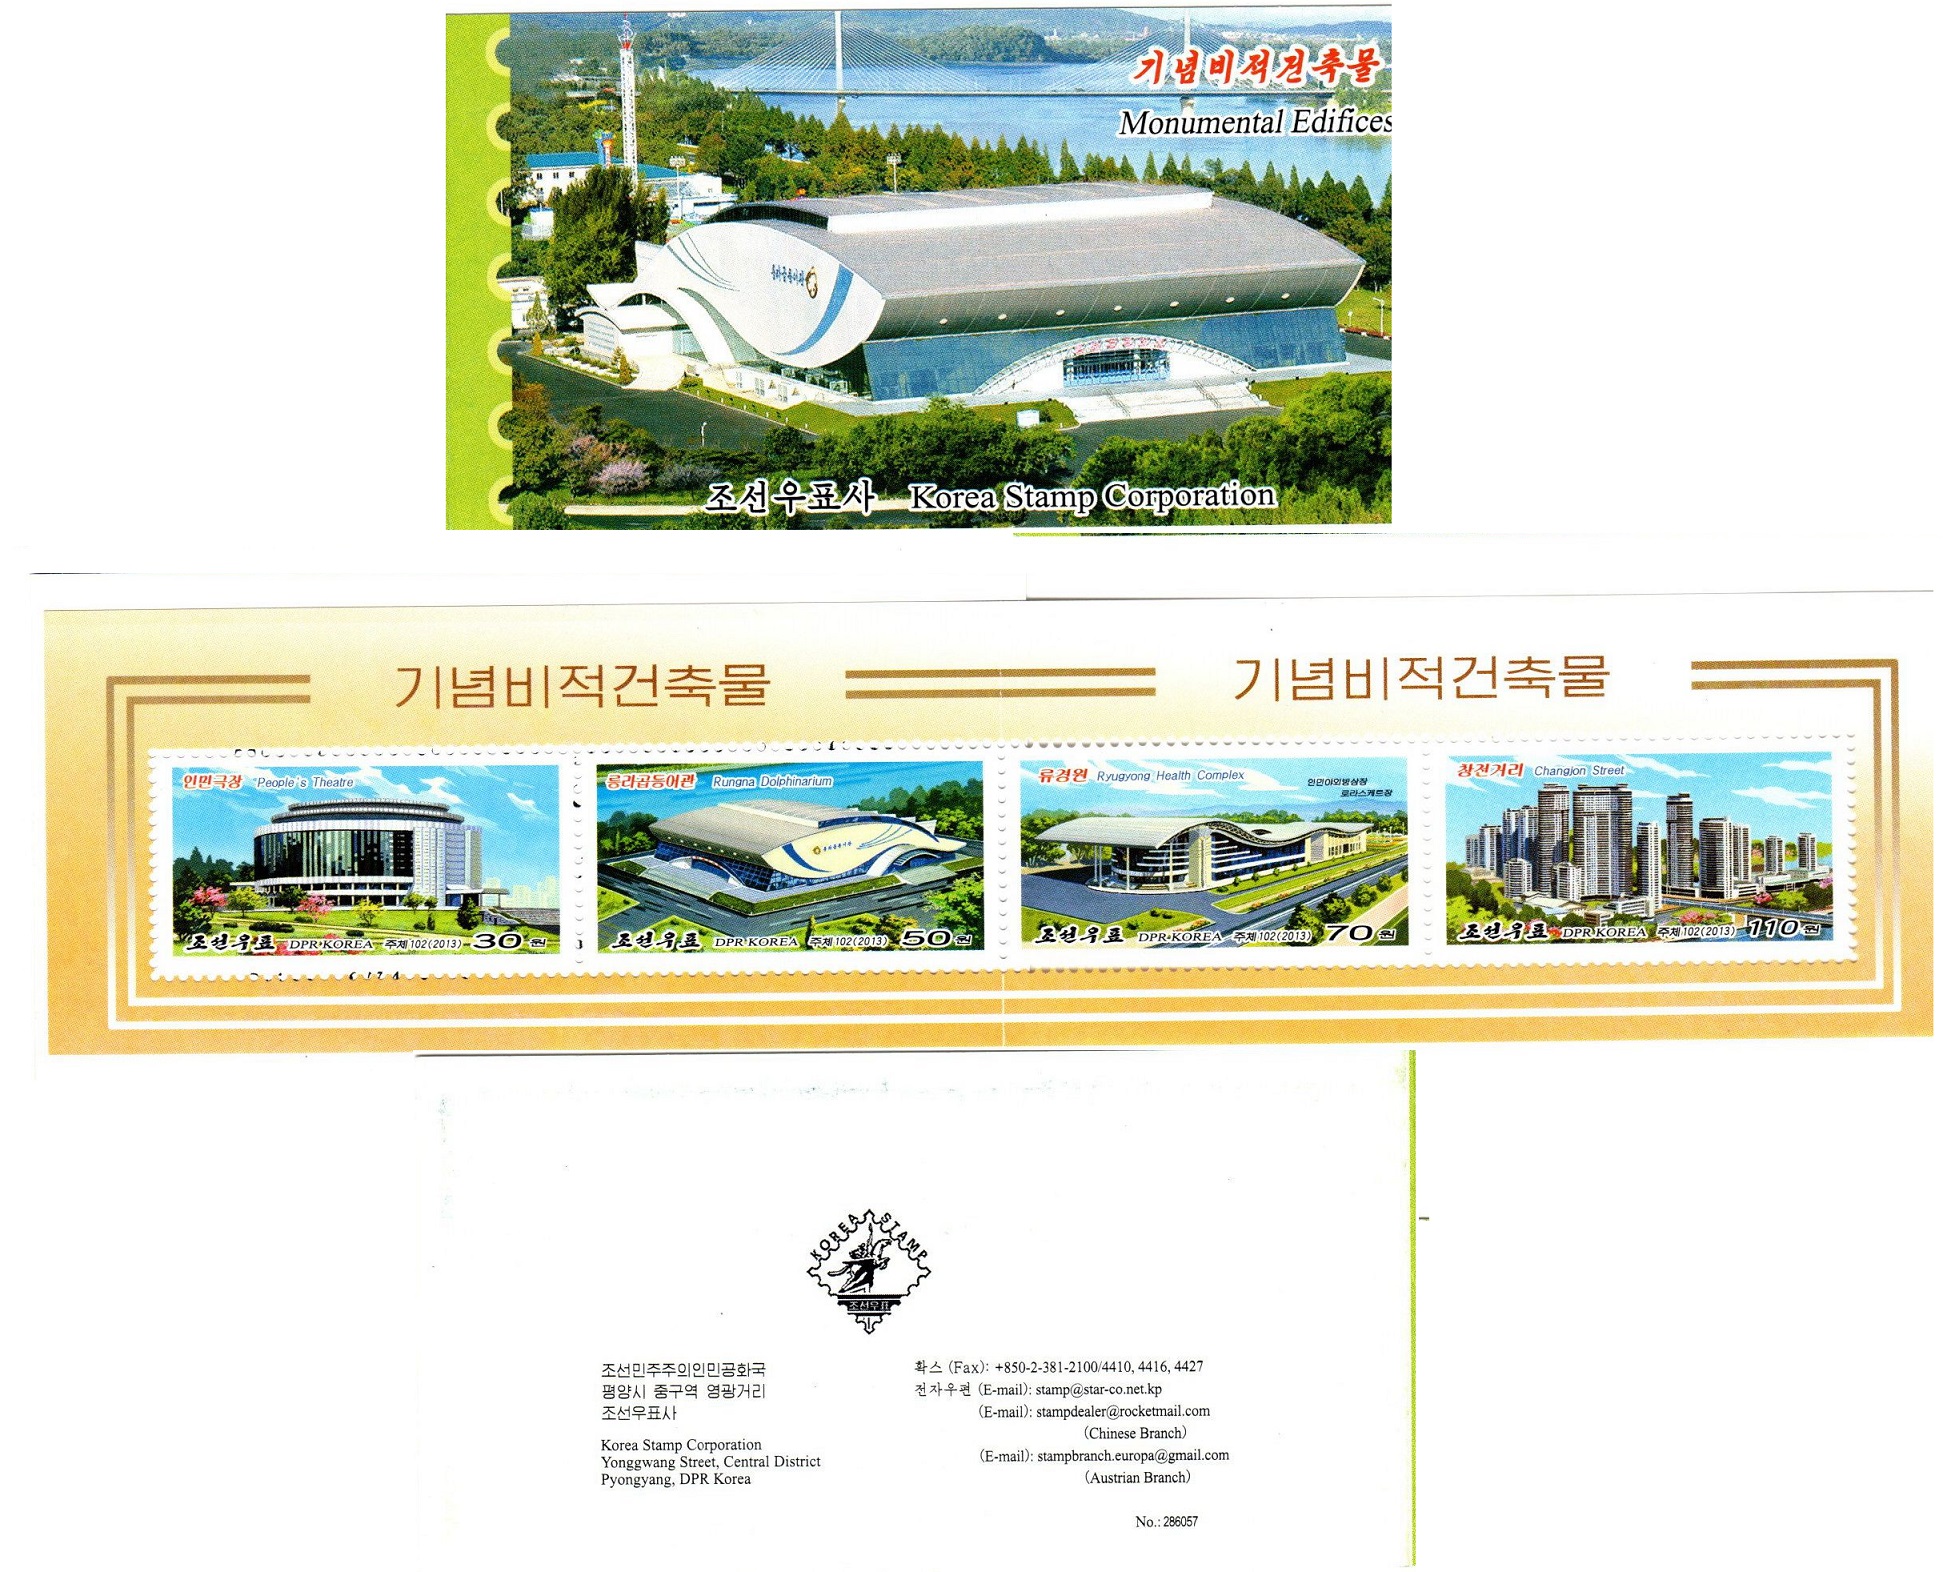 L9097, Korea "Monumental Edifices Building" Stamp Booklet, 2013